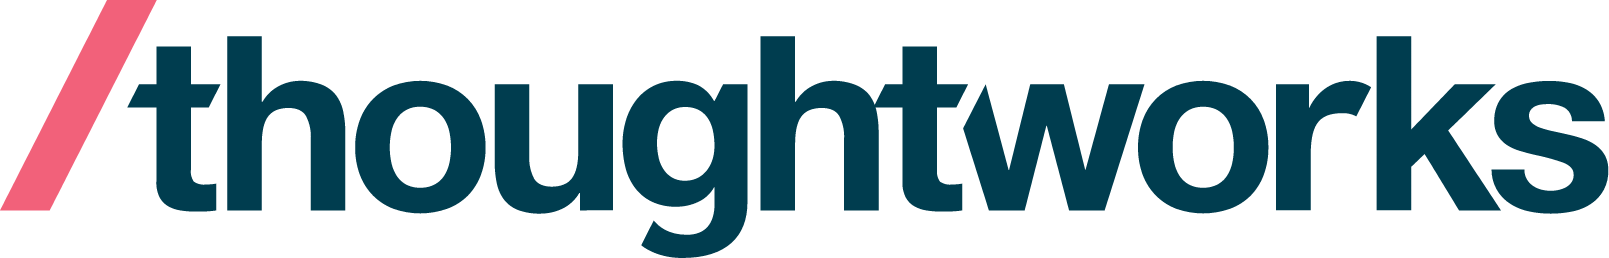 Thoughtworks
 logo large (transparent PNG)